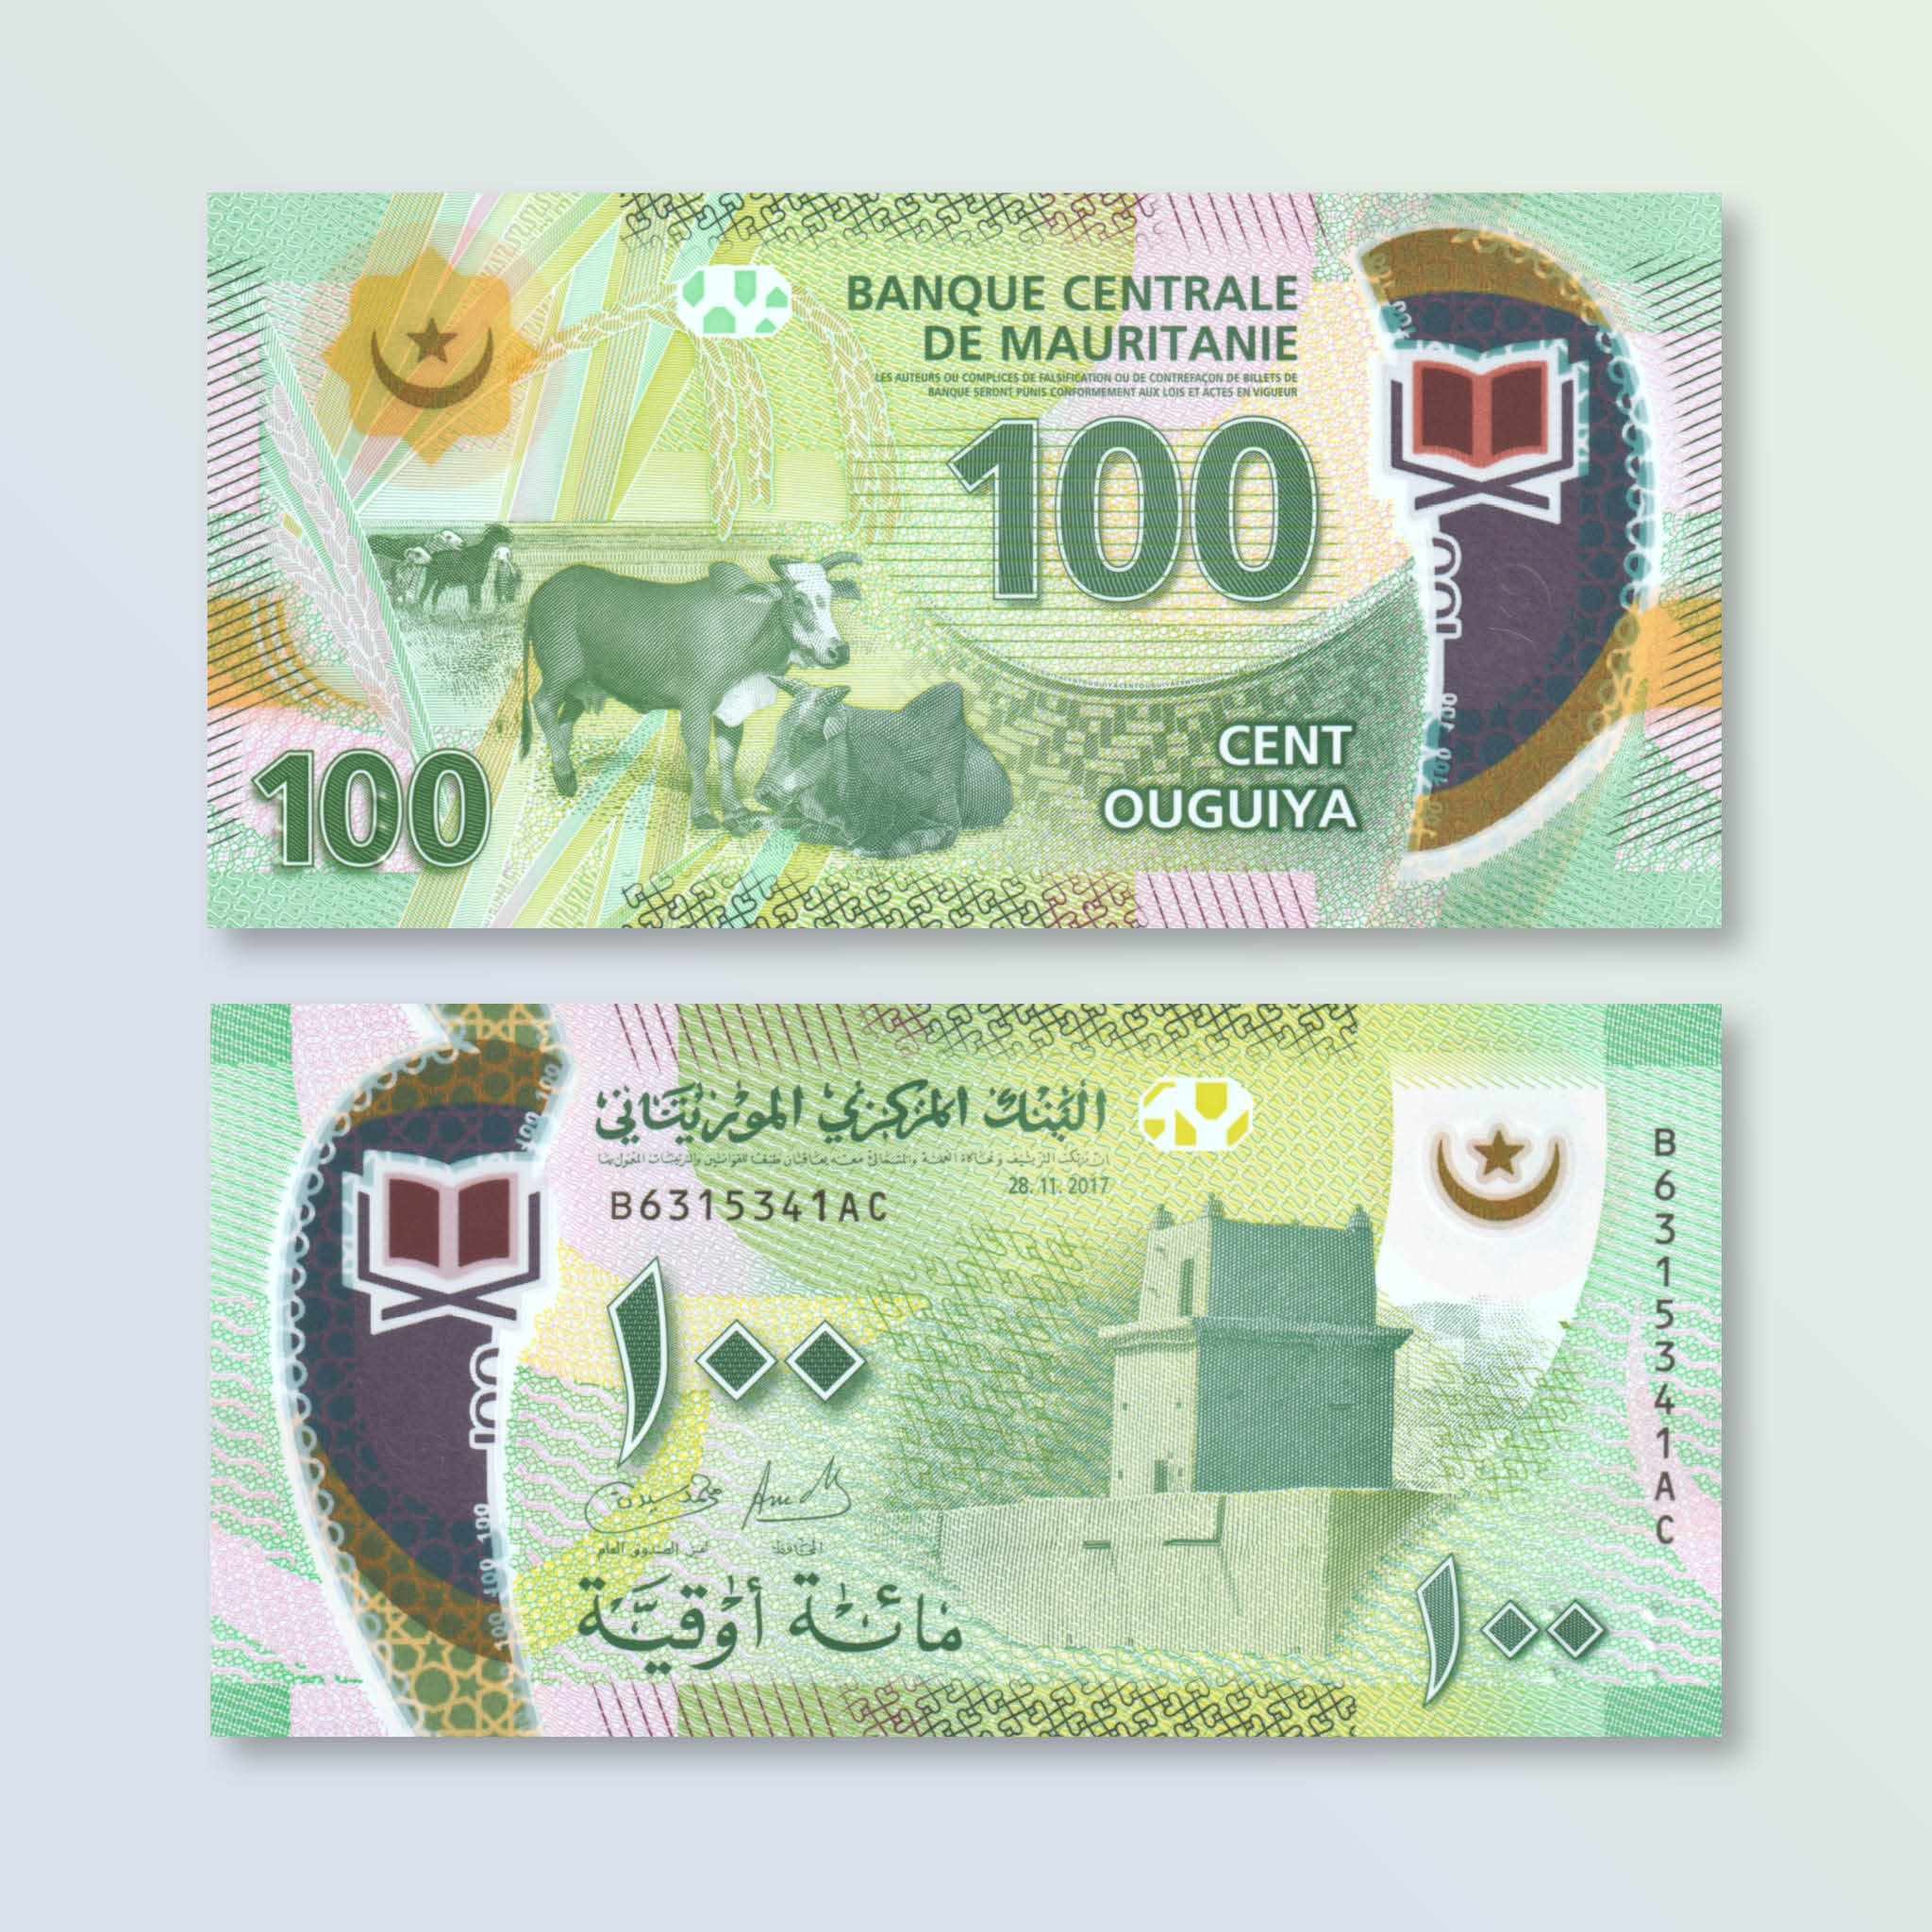 Mauritania 100 Ouguiya, 2017, B127a, P23, UNC - Robert's World Money - World Banknotes